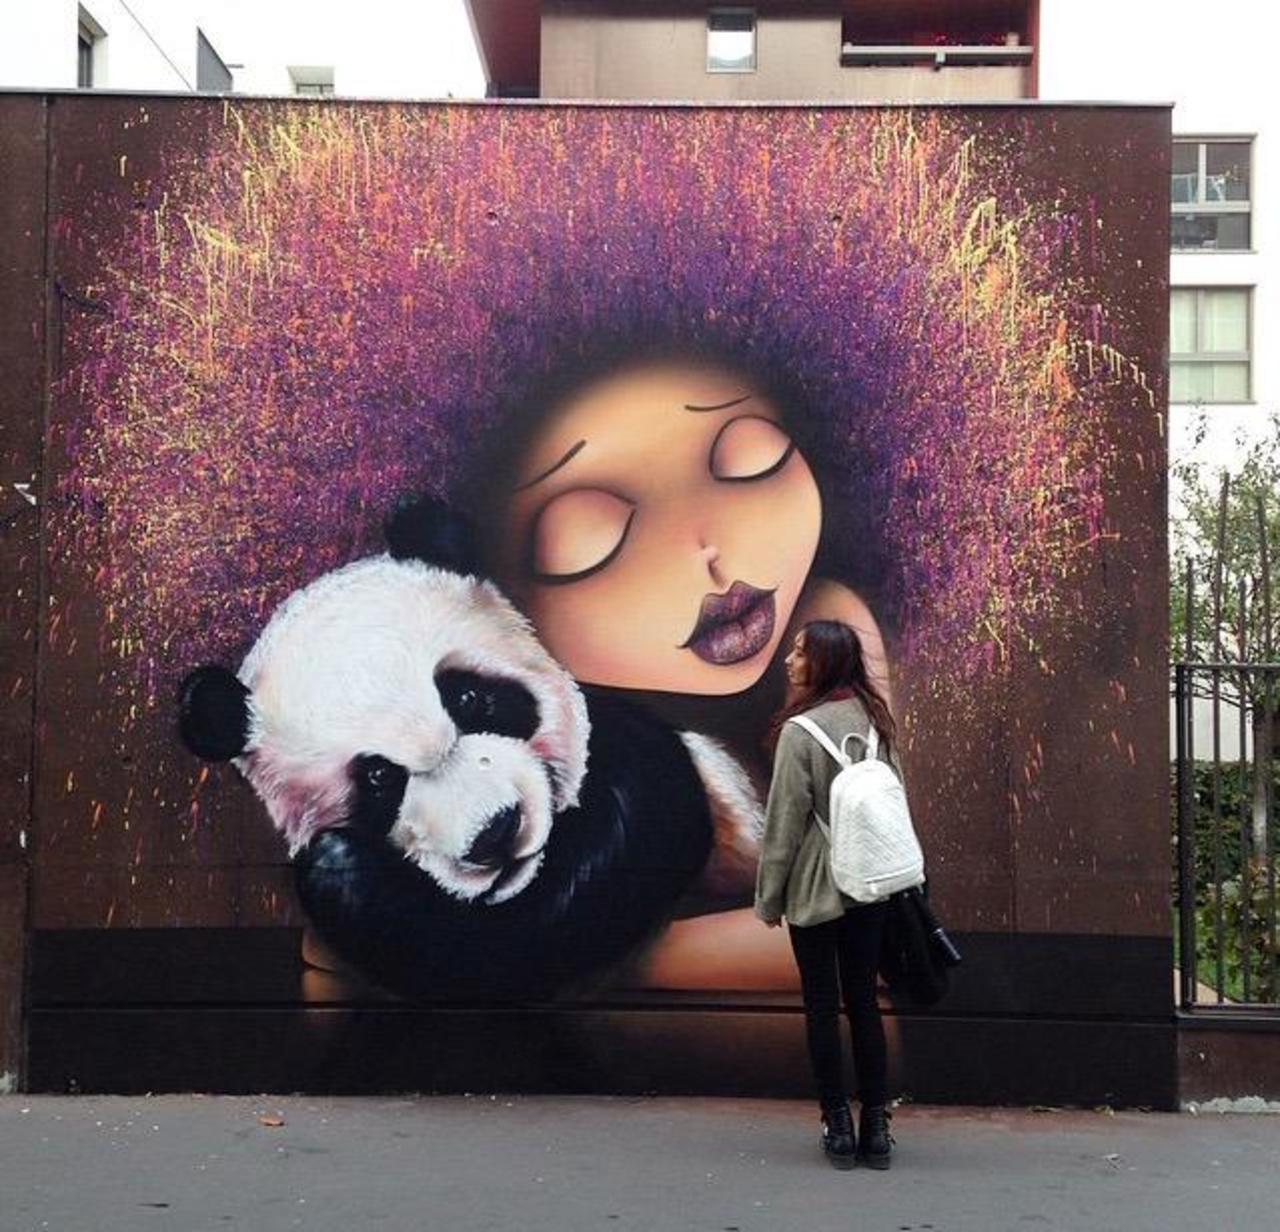 Street Art by VinieGraffiti in Paris 

#art #graffiti #mural #streetart http://t.co/krKejZGFKC